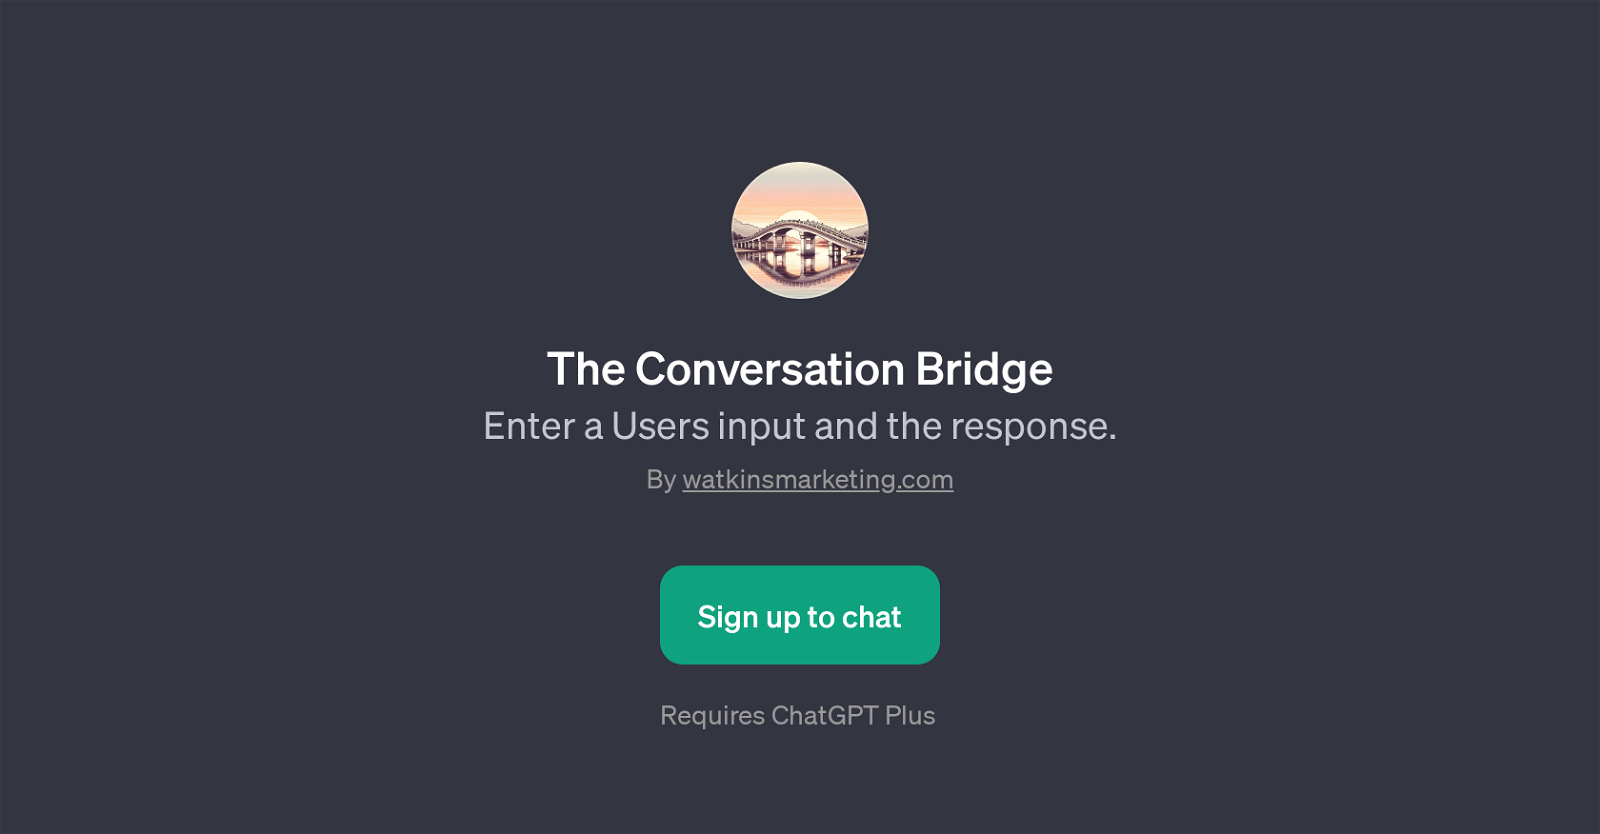 The Conversation Bridge website